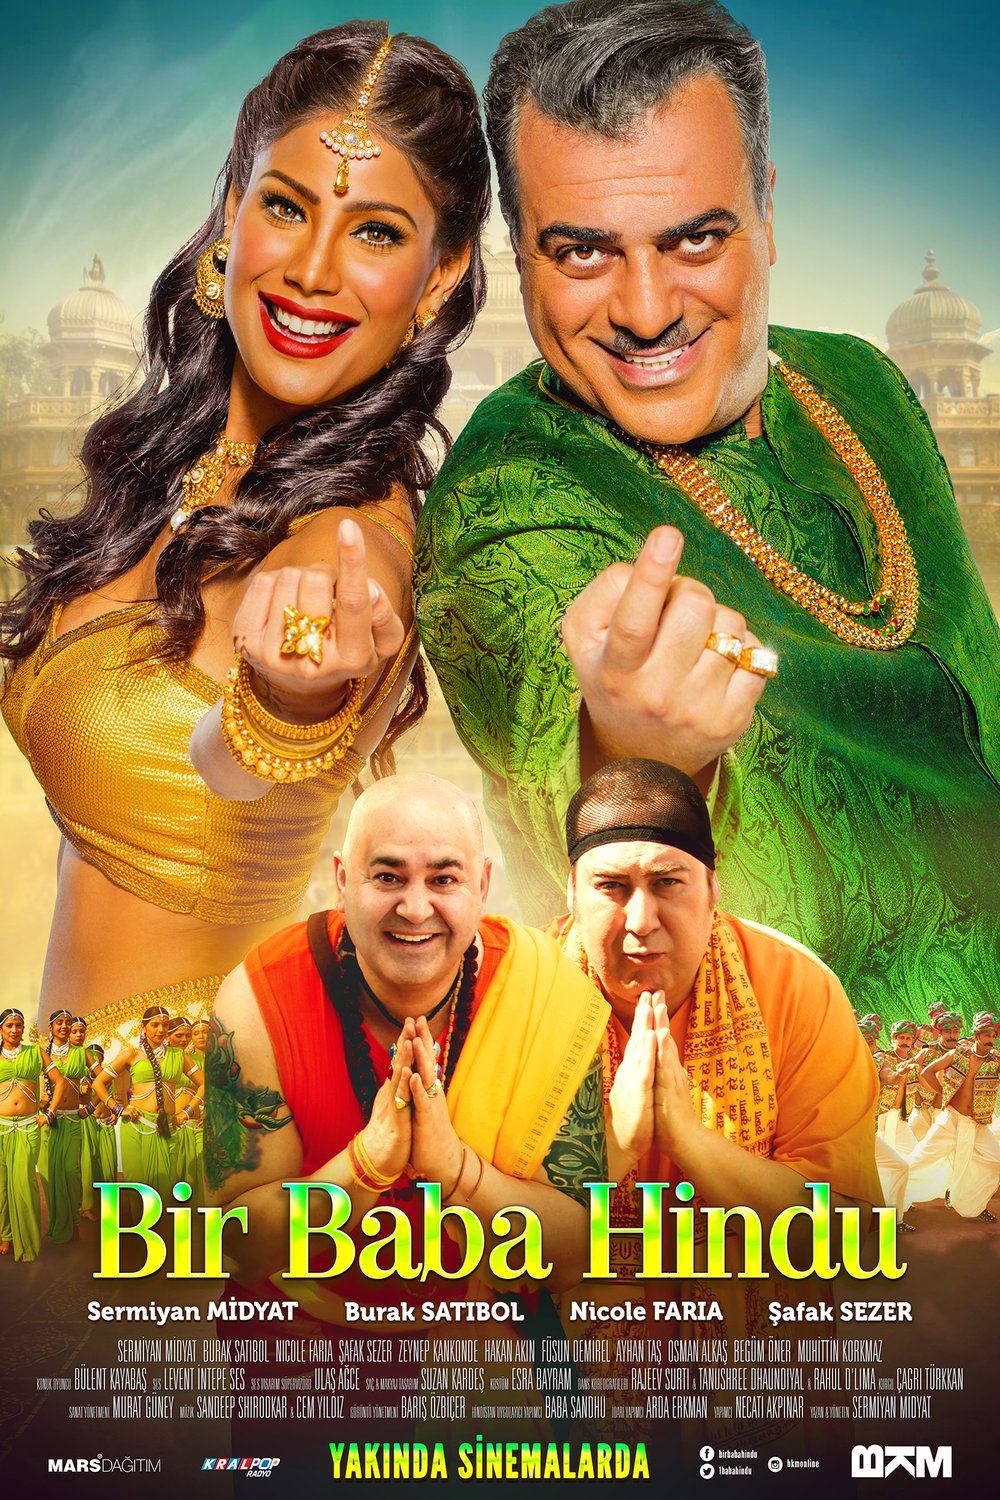 L'affiche originale du film Bir Baba Hindu en turc